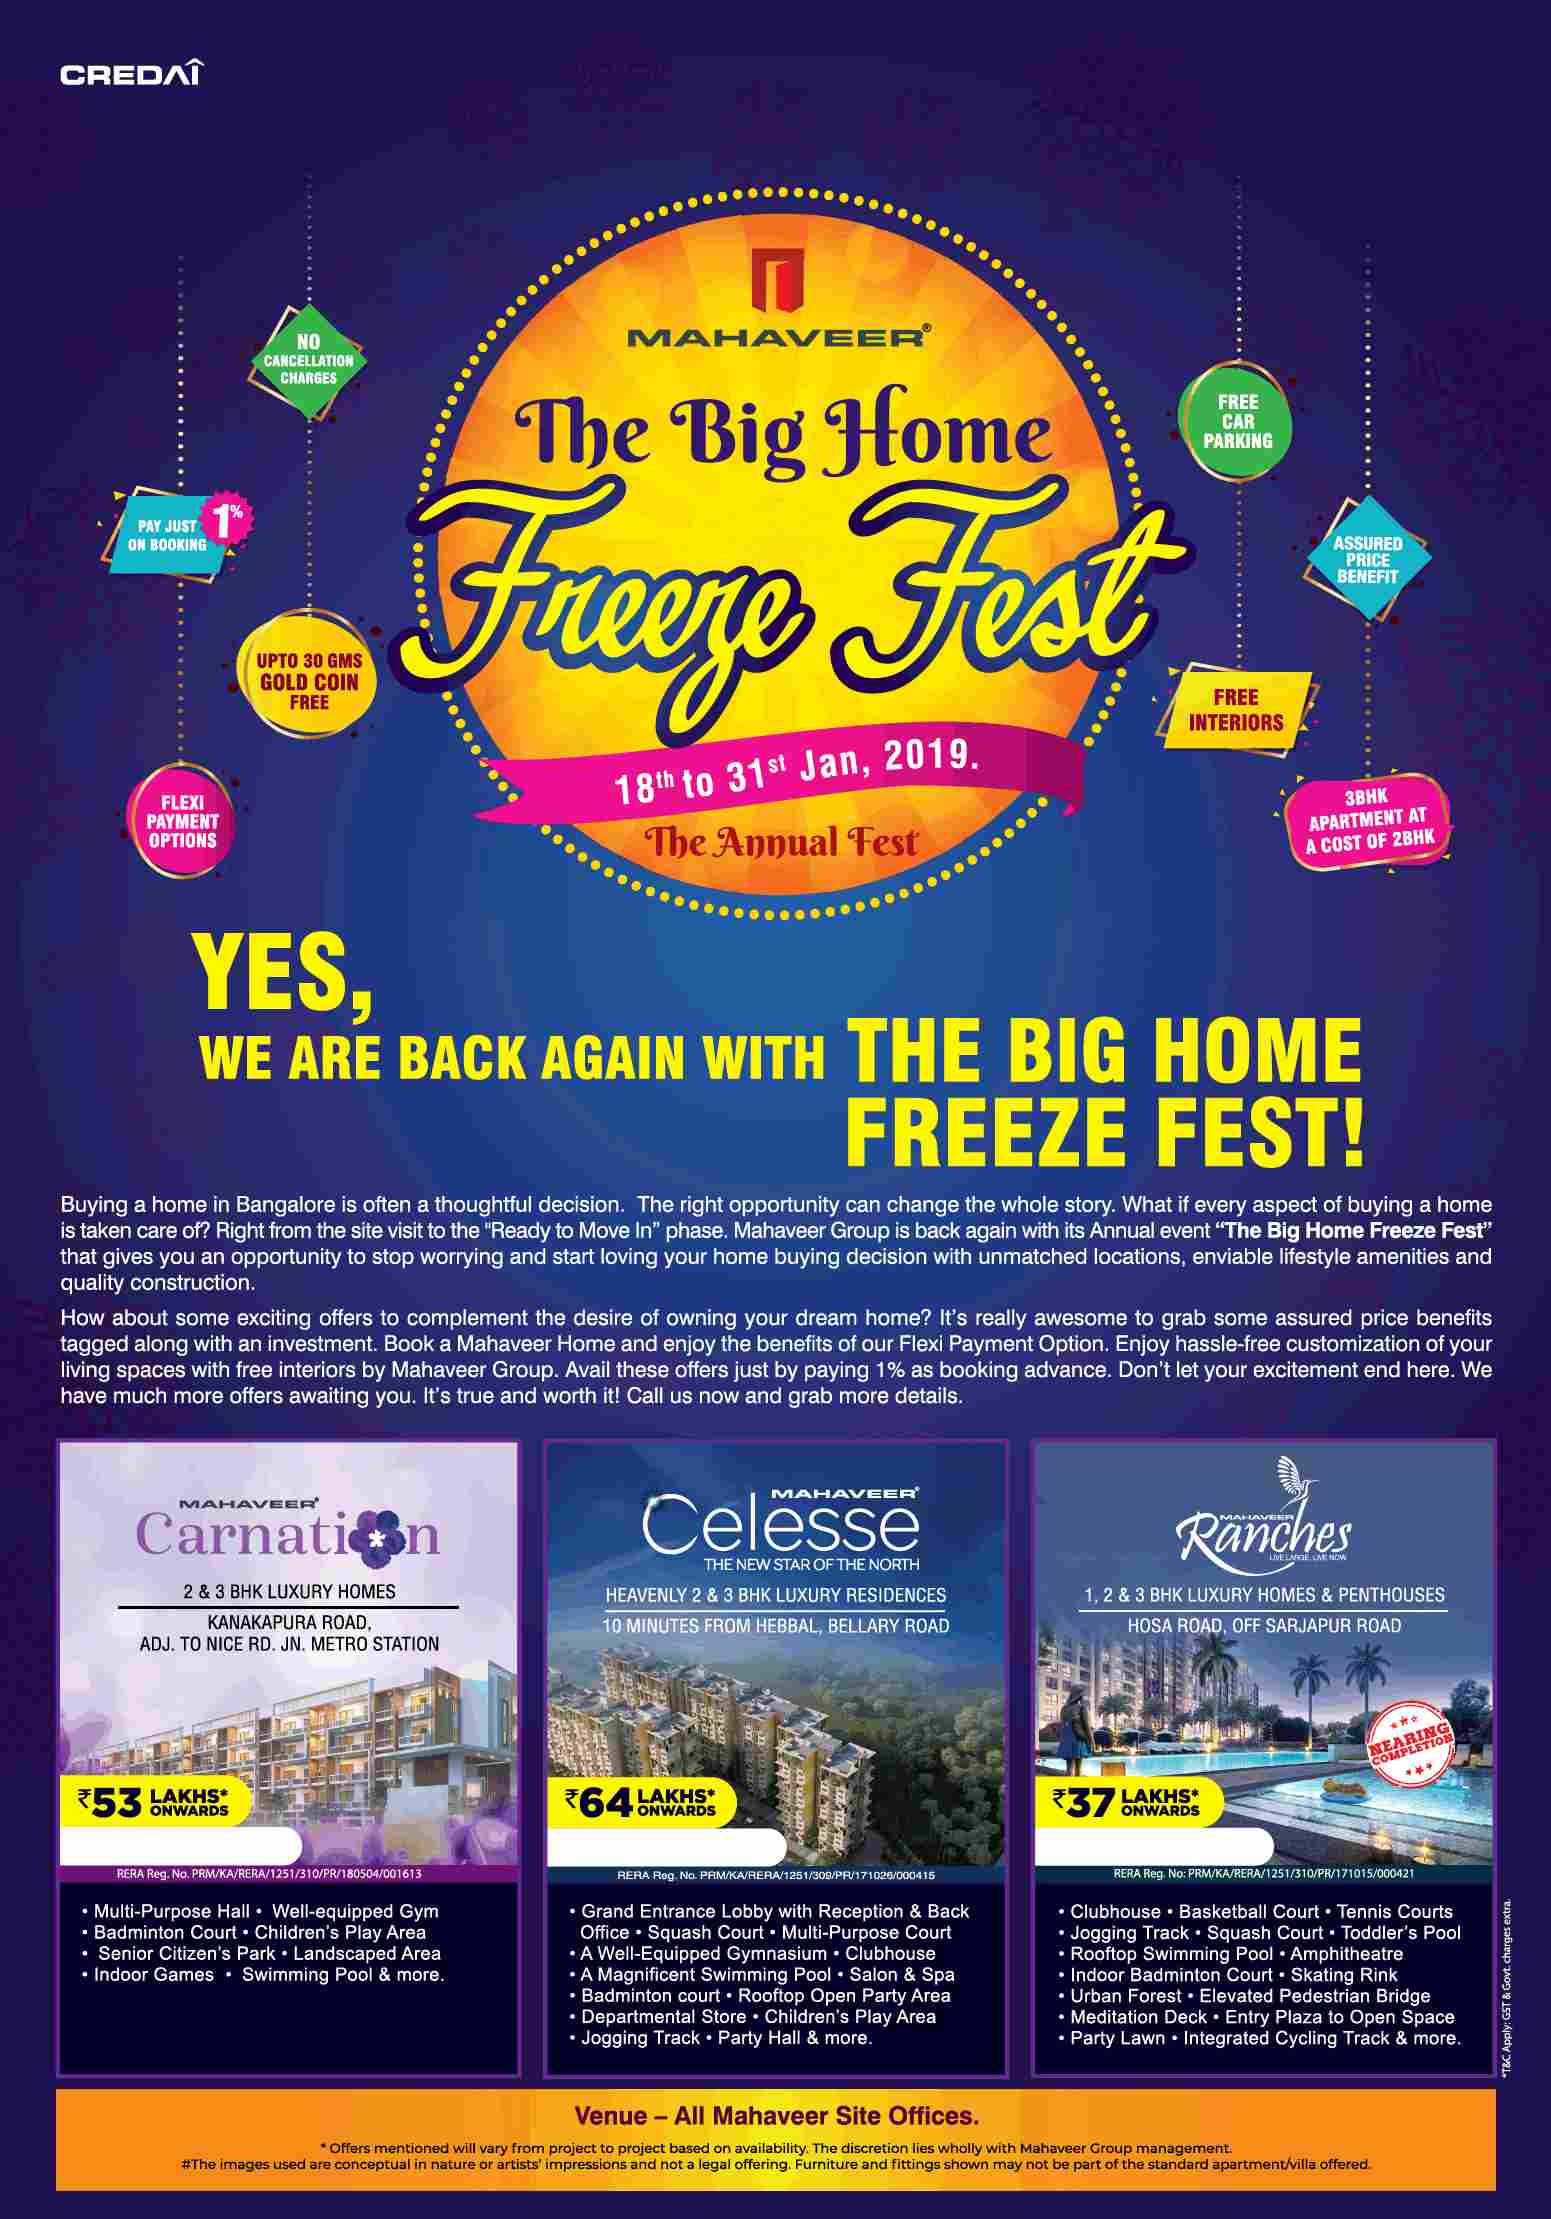 Presenting Mahaveer The Big home Freeze Fest 2019 Update